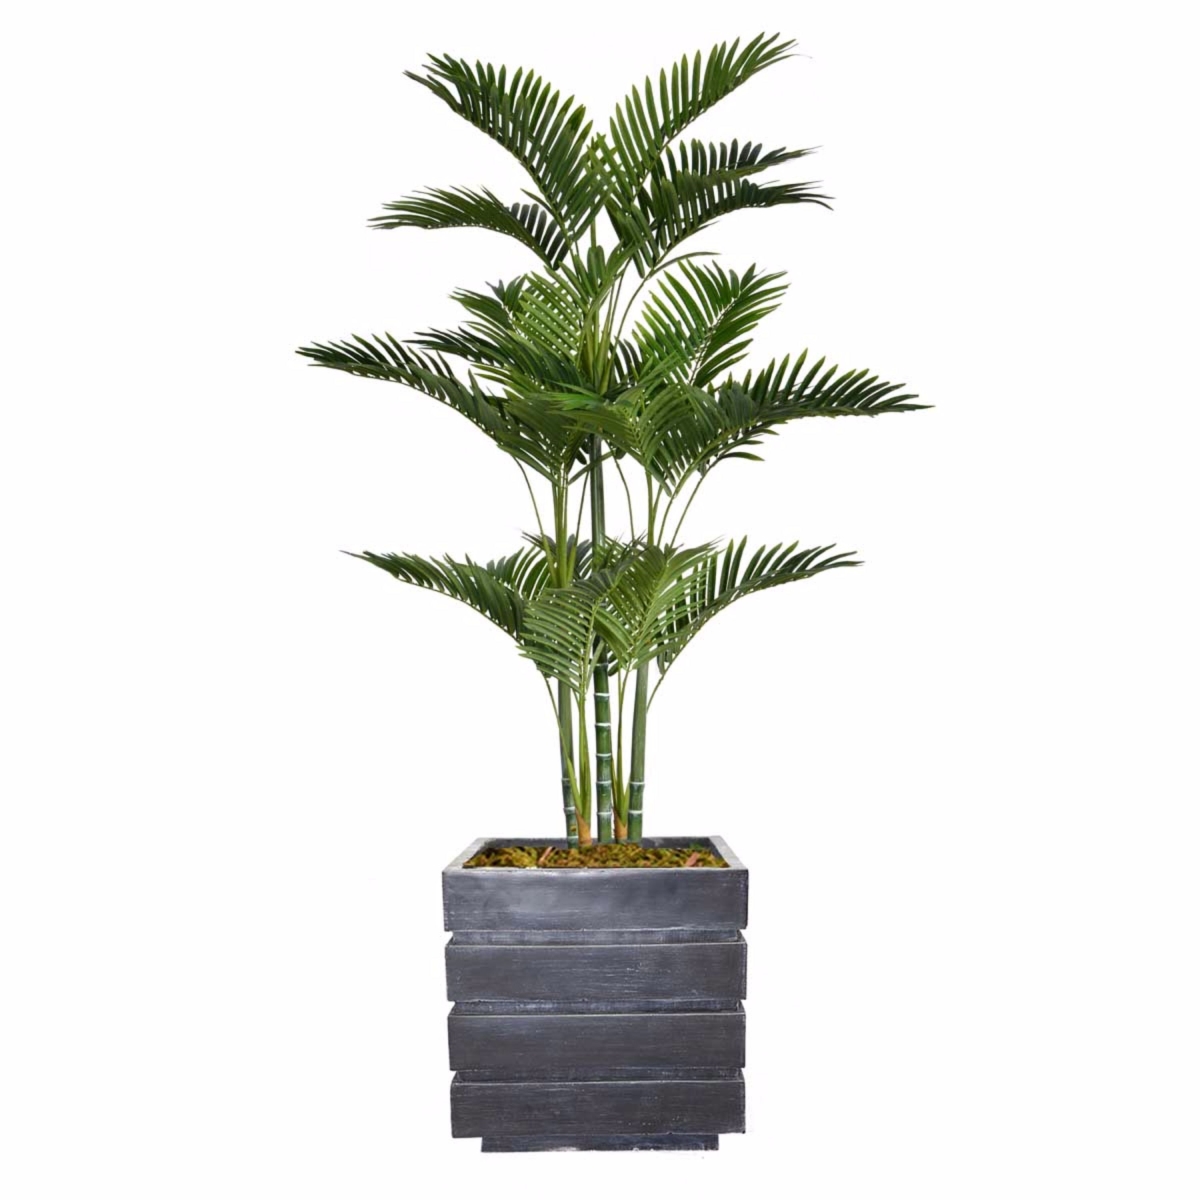 Vhx132204 66 In. Tall Palm Tree With Burlap Kit & Fiberstone Planter